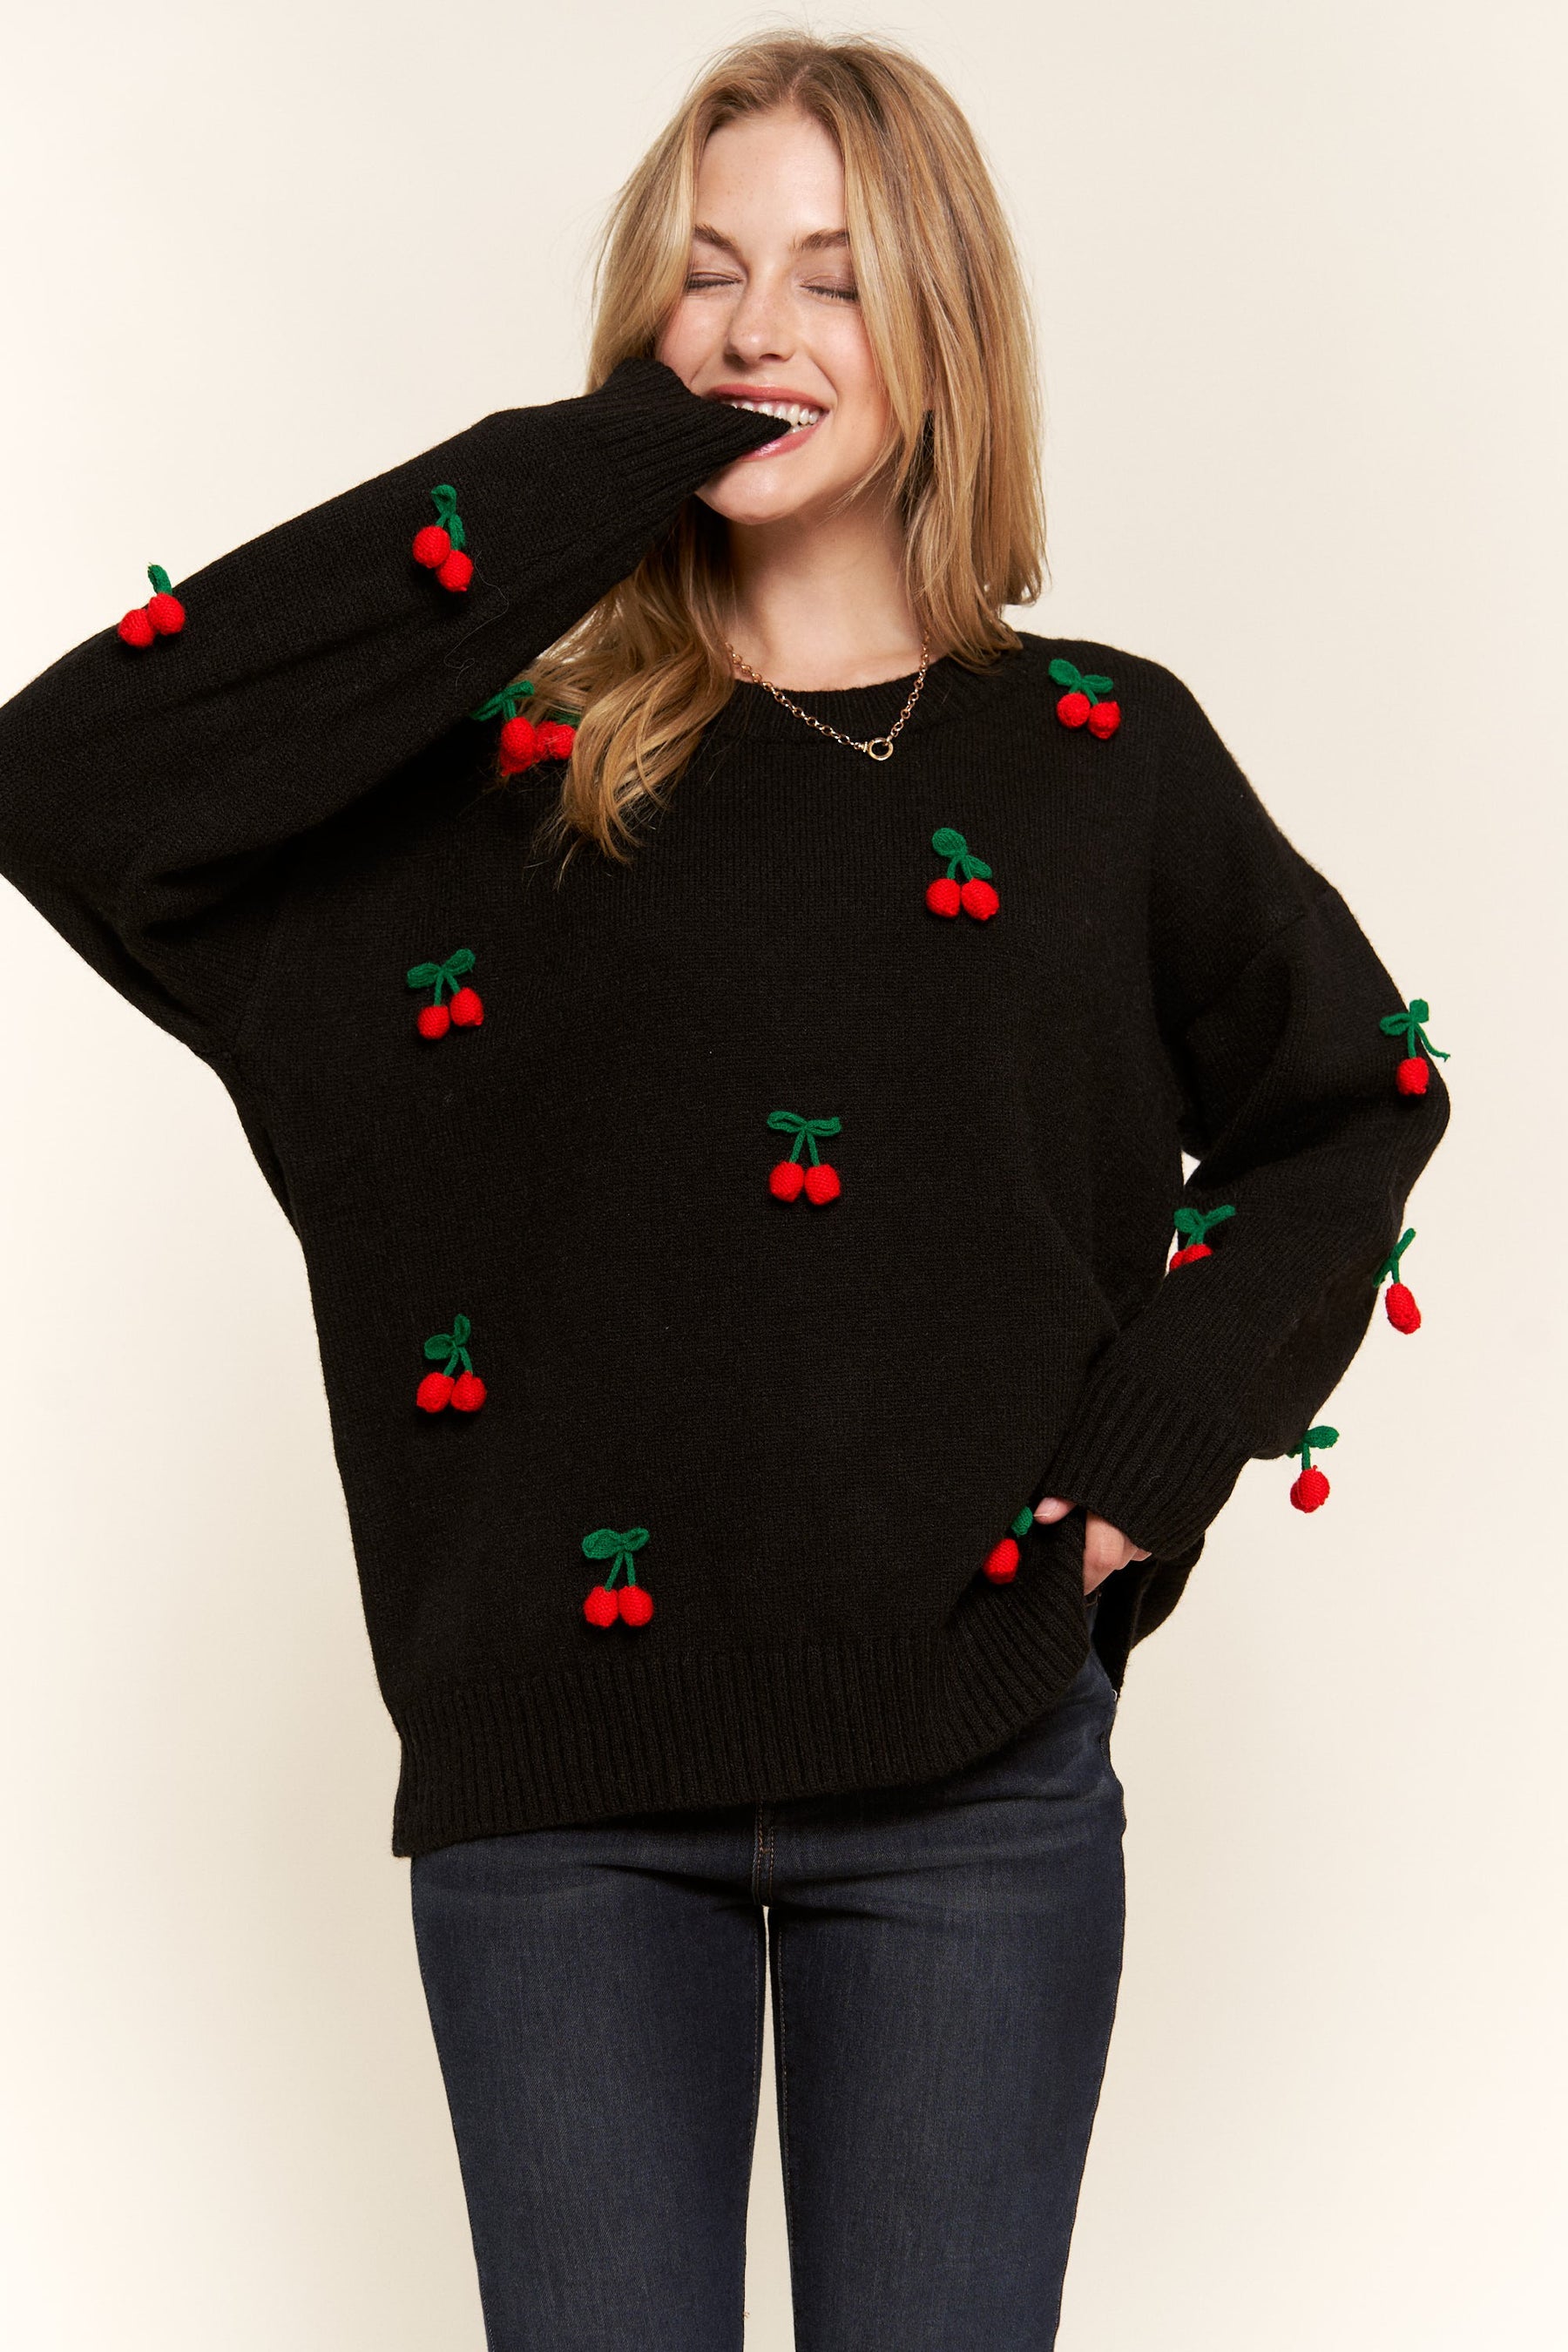 Shirley Temple Cherry Pom Sweater